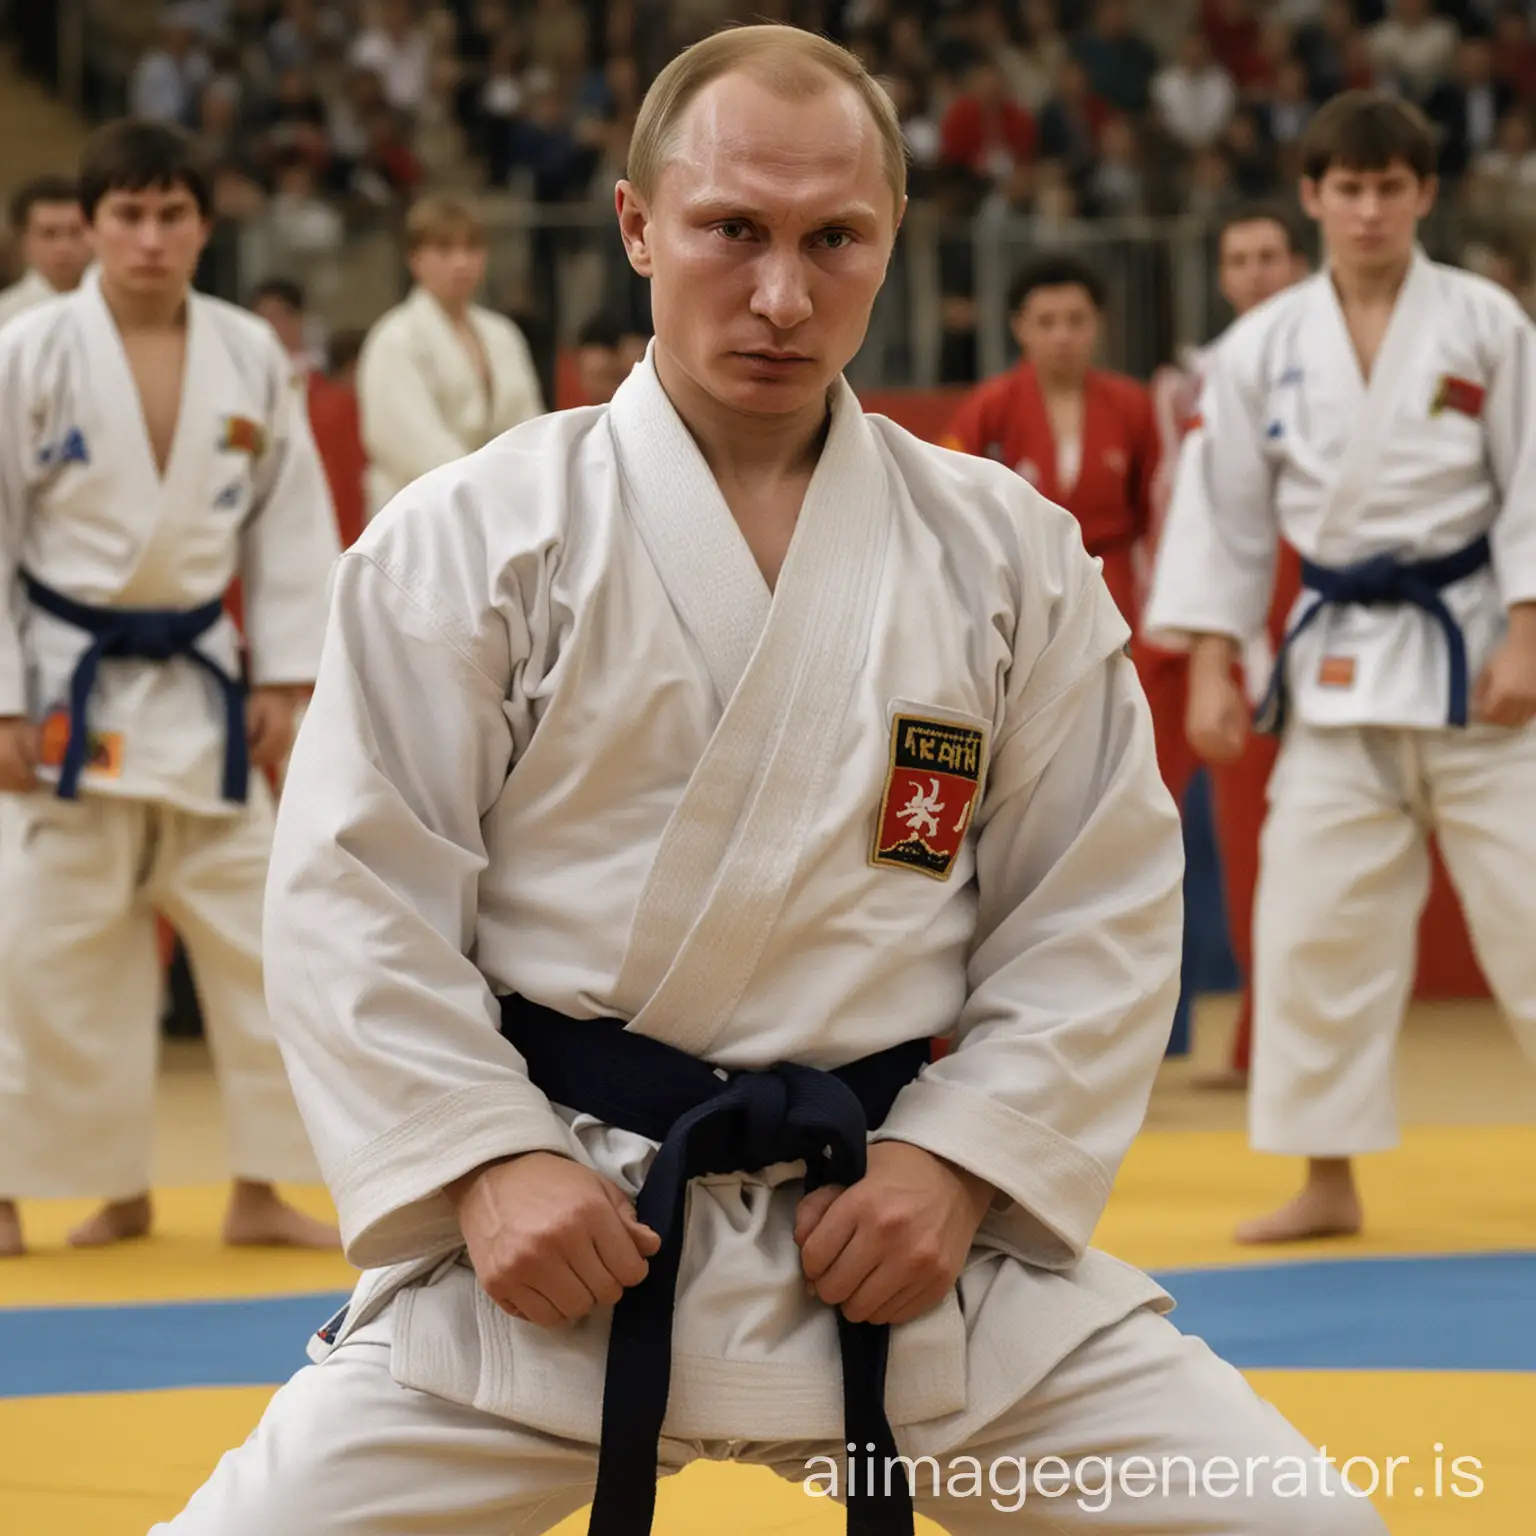 Determined-Teenage-Vladimir-Putin-Judo-Match